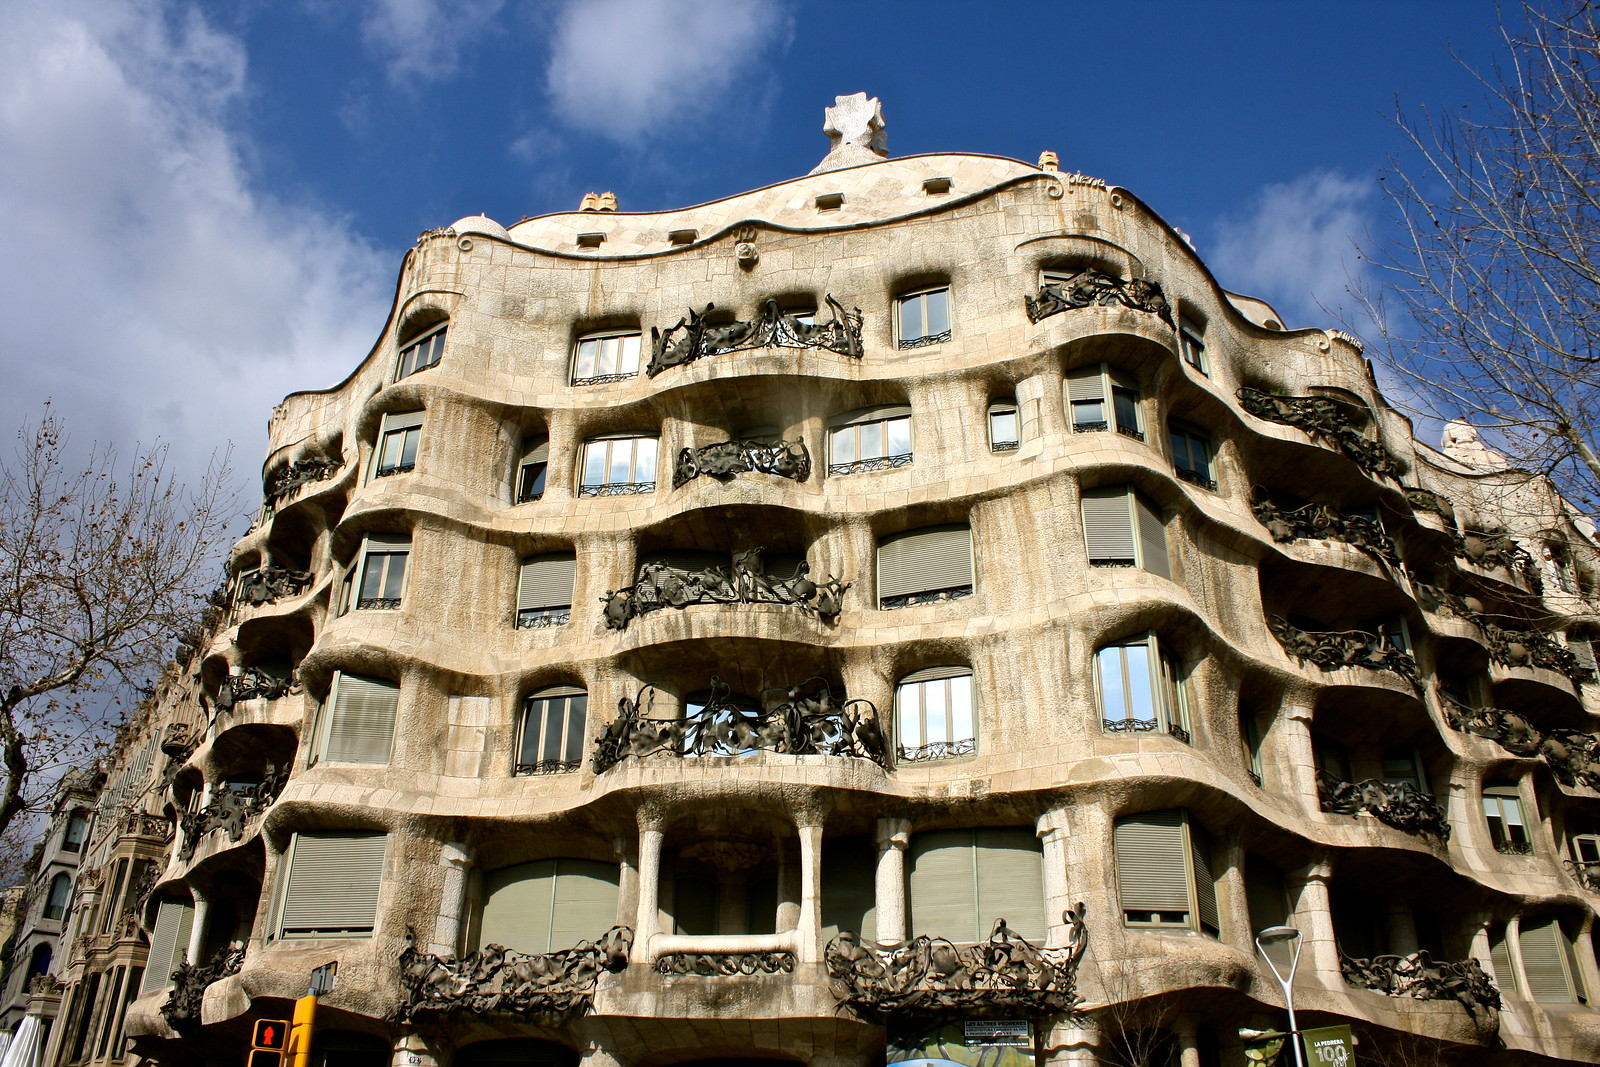 Casa Milà / La Pedrera by Antoni Gaudí in Barcelona, Spain